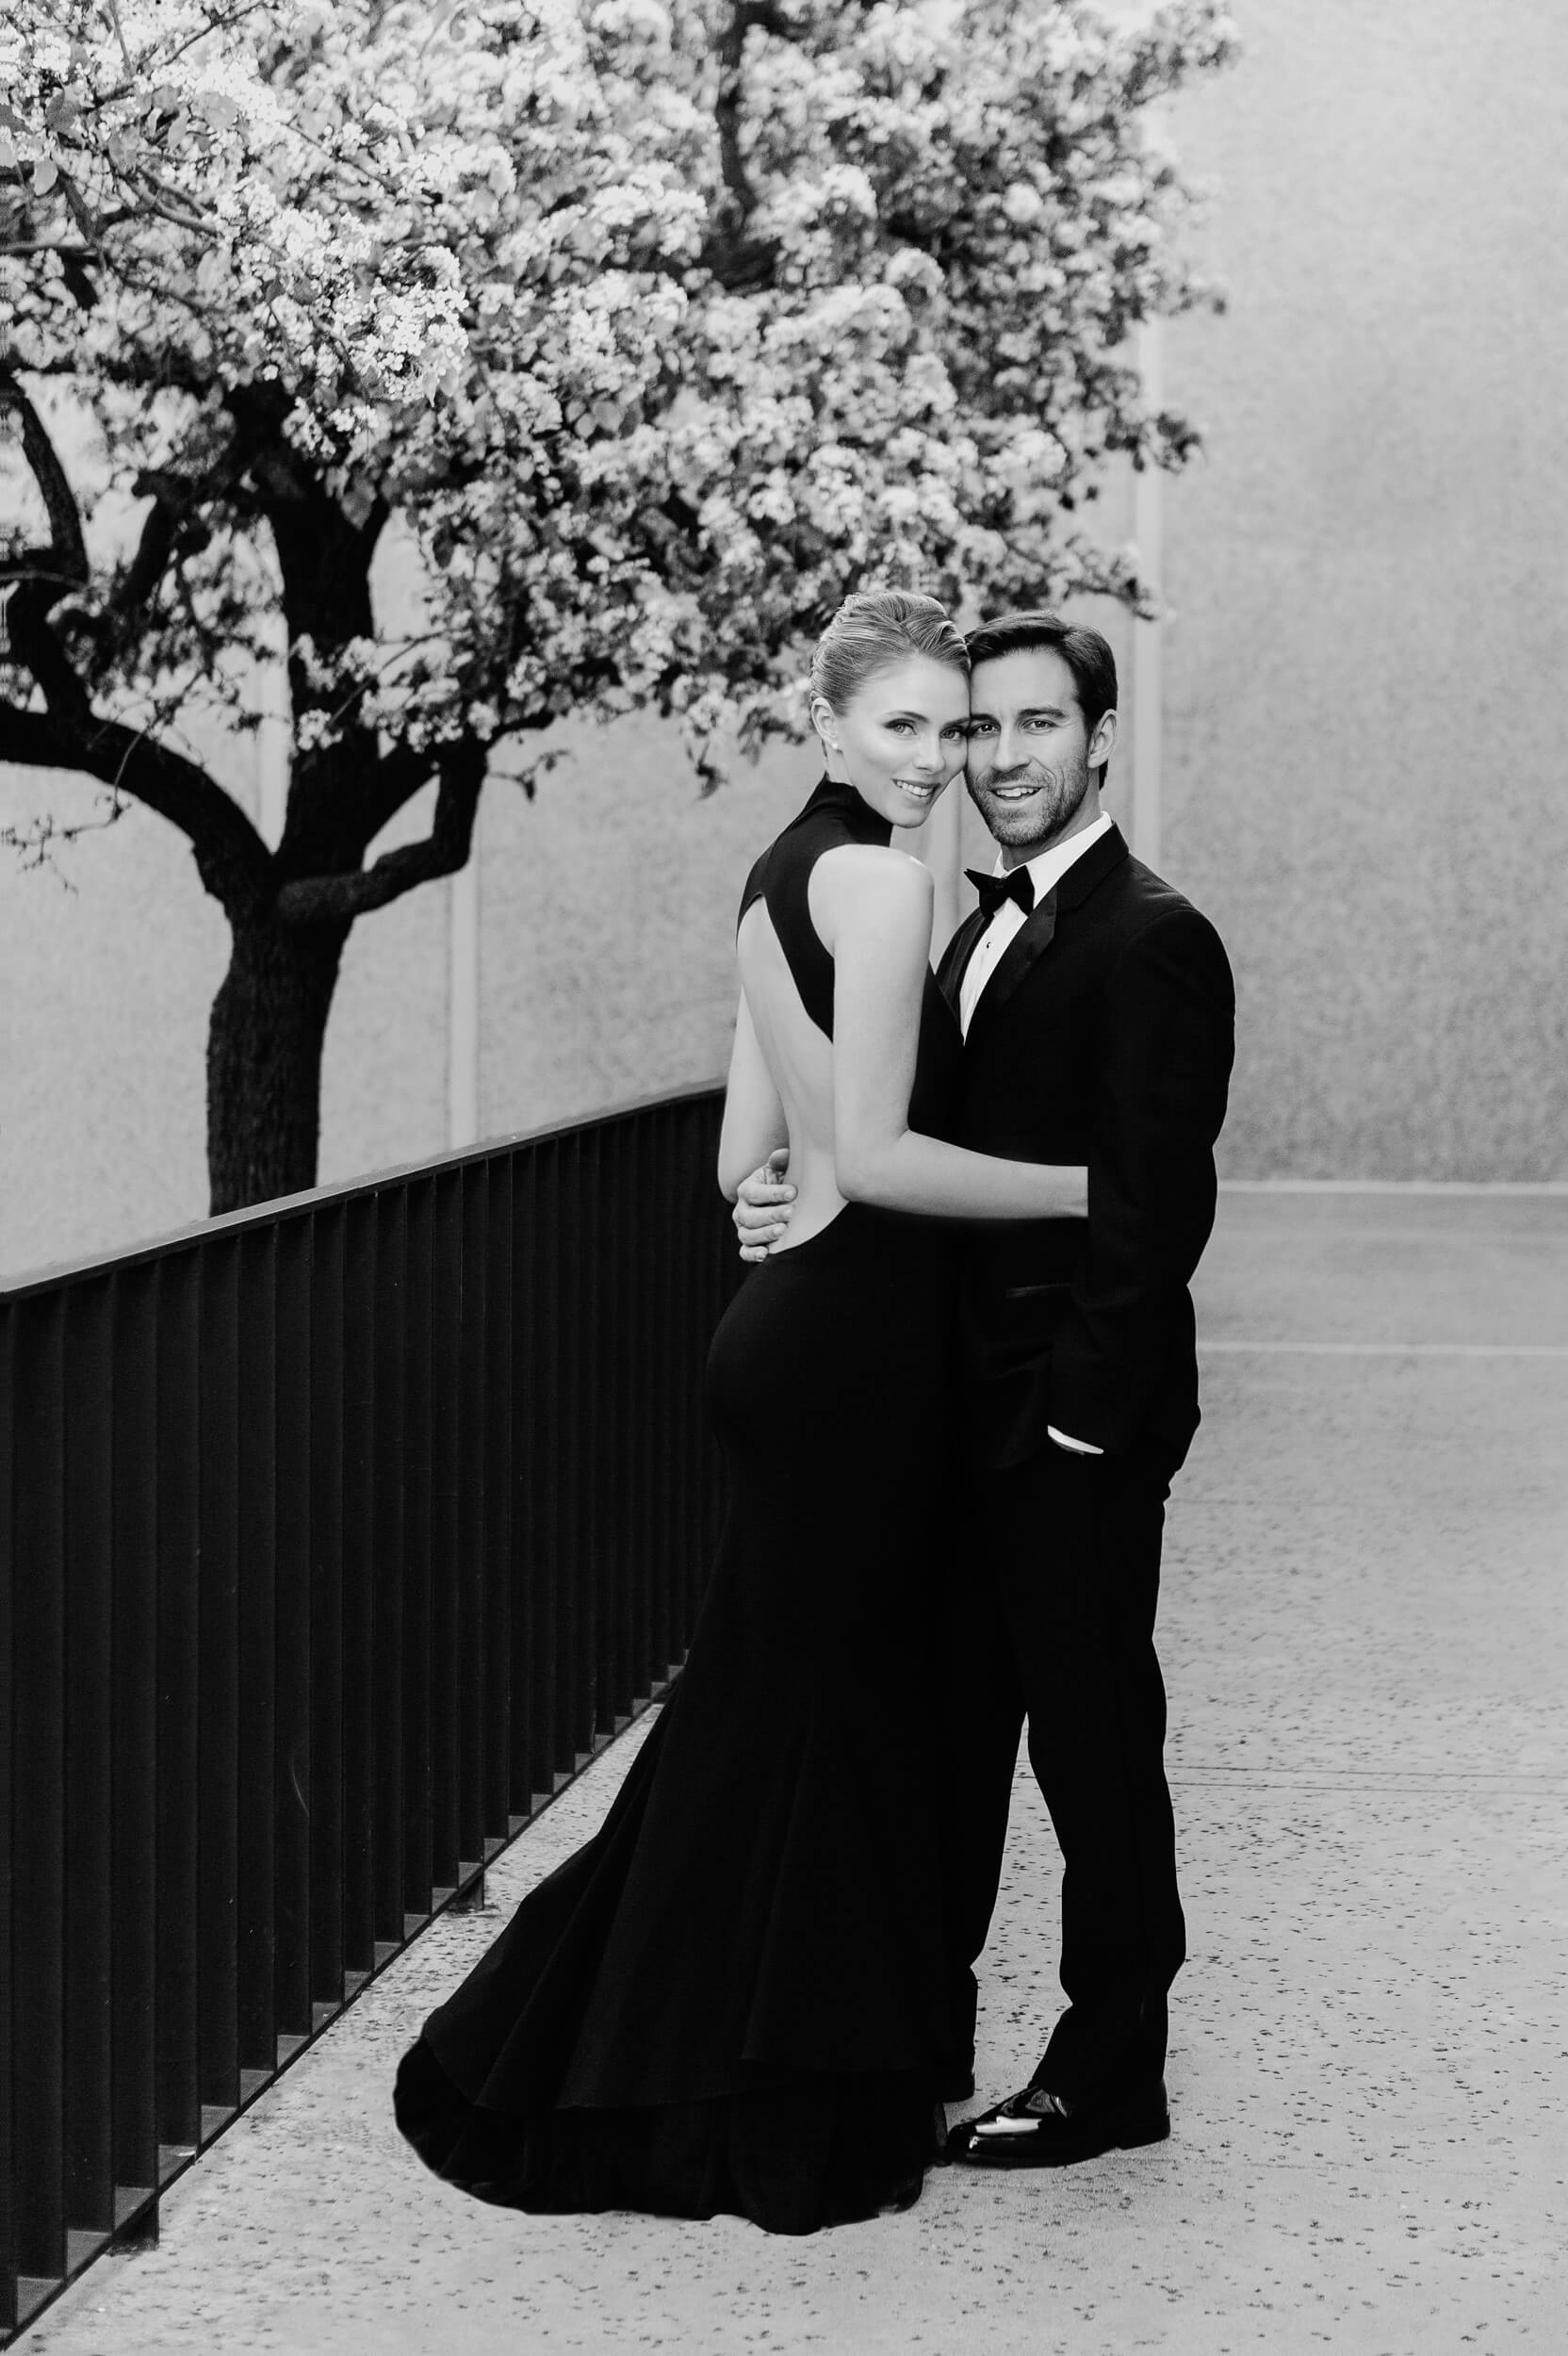 couple in formalwear pose near flowering tree and black railing balboa park classic engagement photo